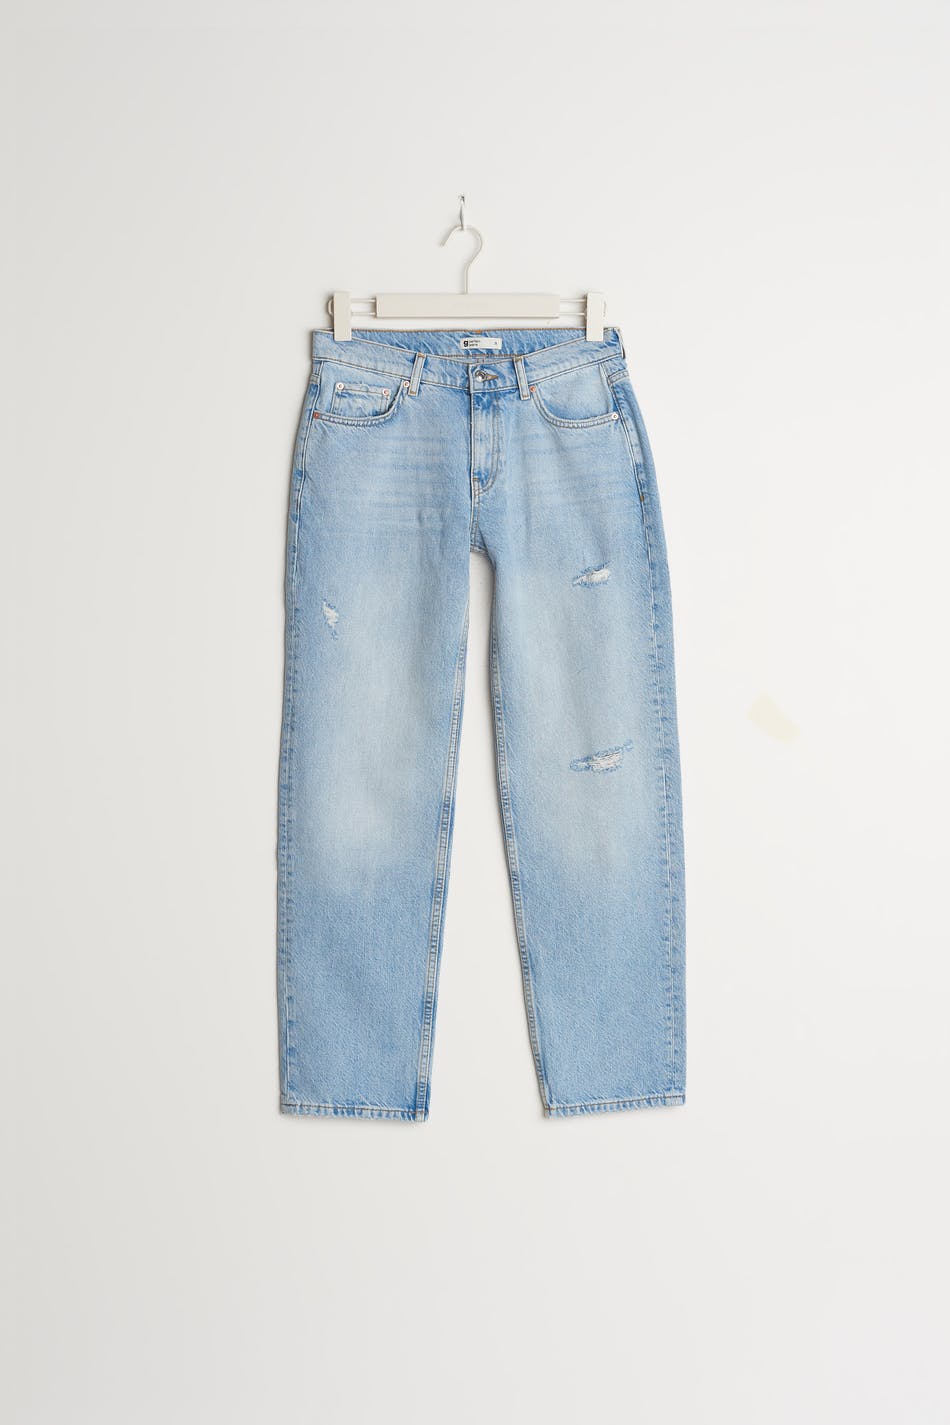 Gina Tricot 90s petite low waist jeans 30  Lt blue